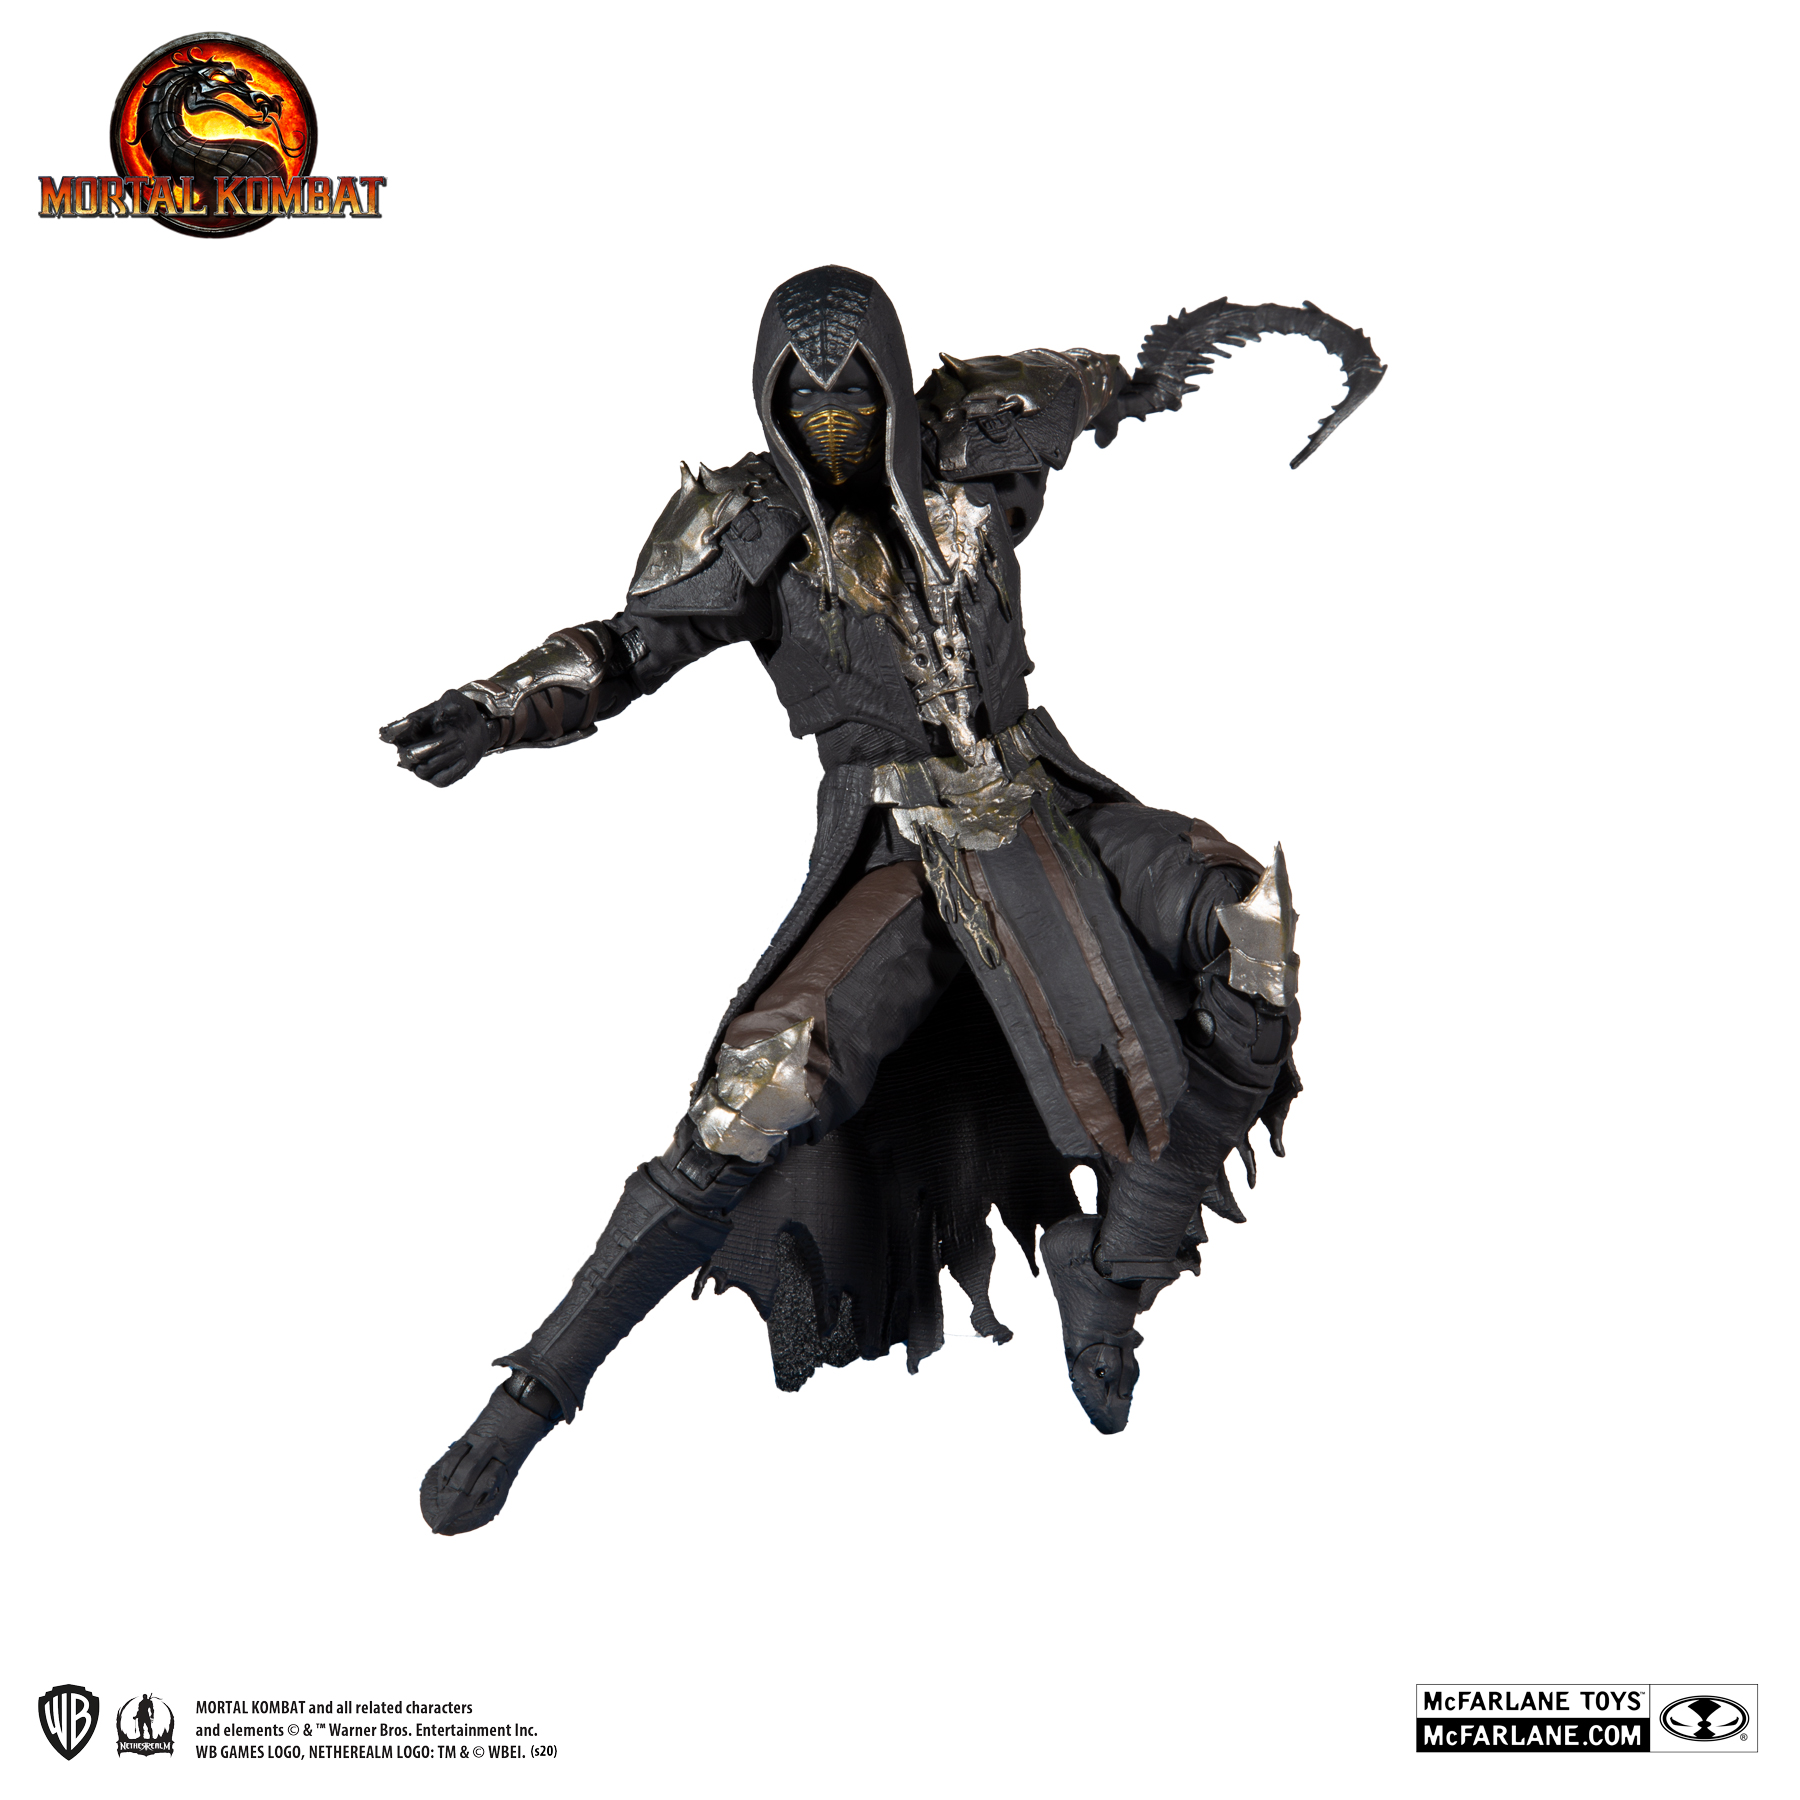 Mortal Kombat XI - Noob Saibot Exclusive - MINT IN BOX – BlackOpsToys